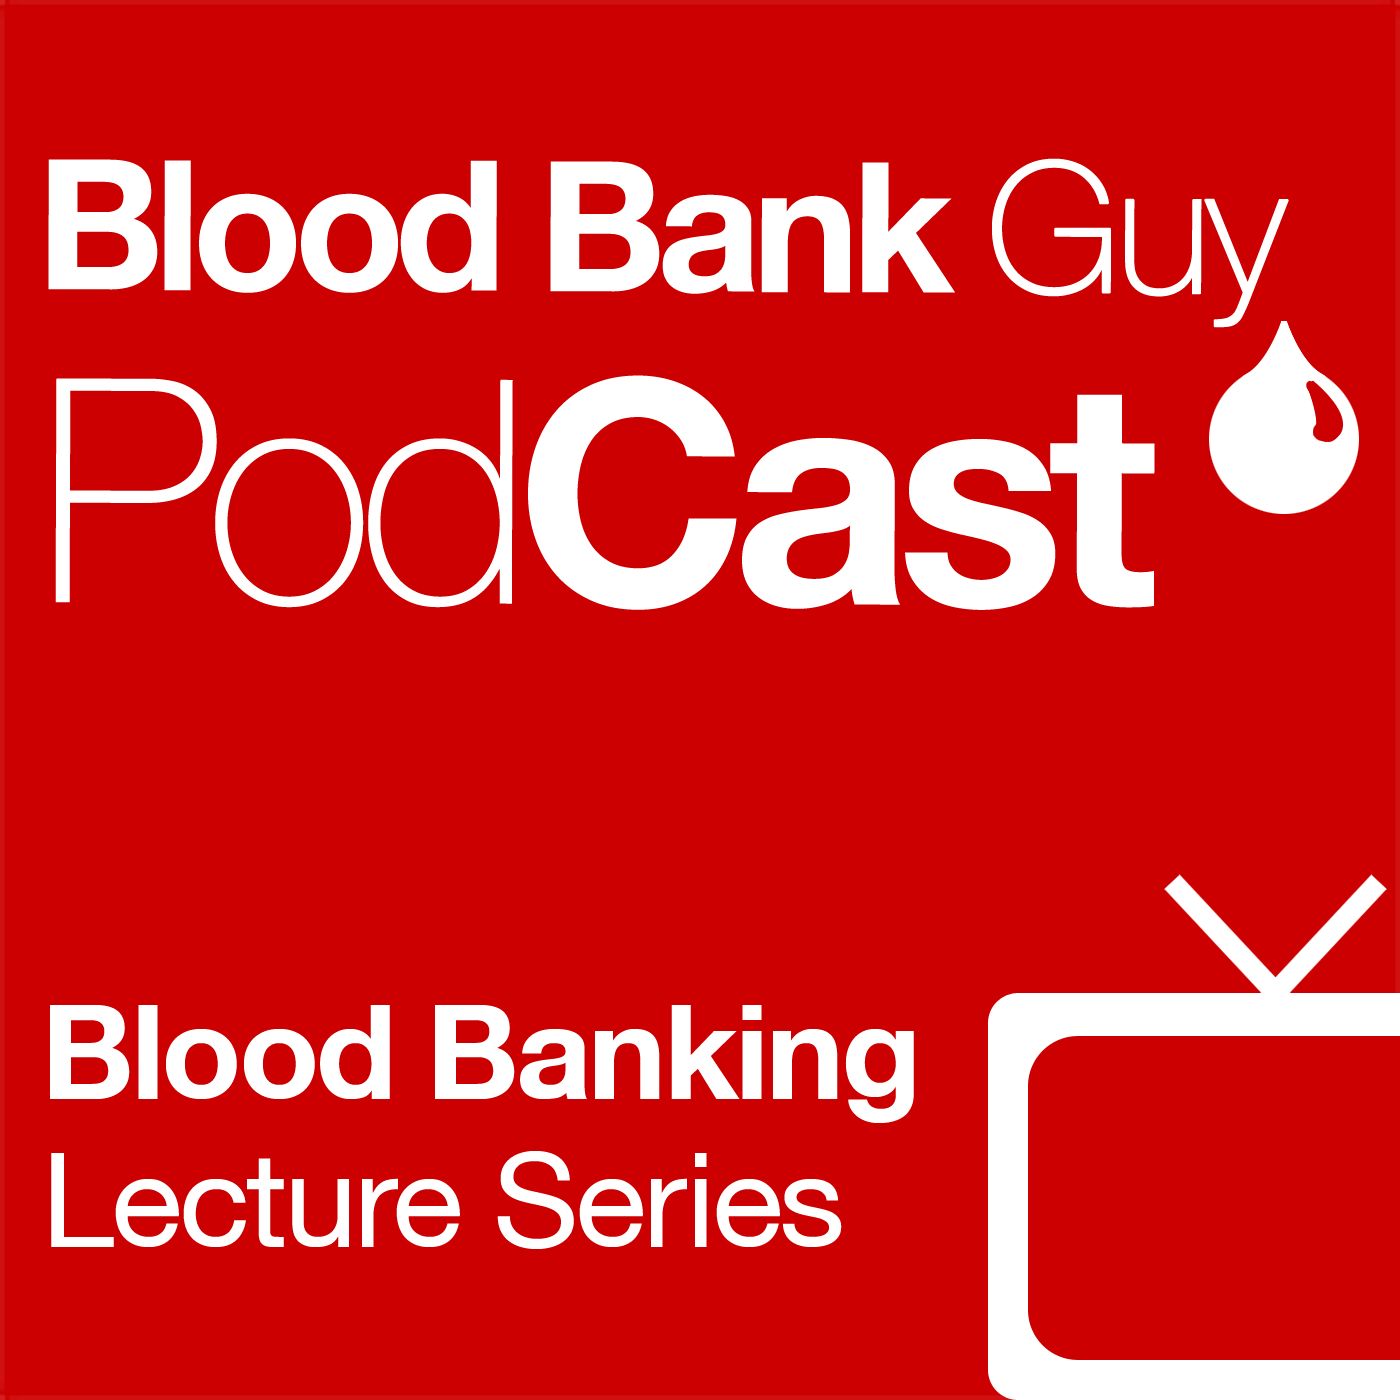 Blood Bank Guy Videos